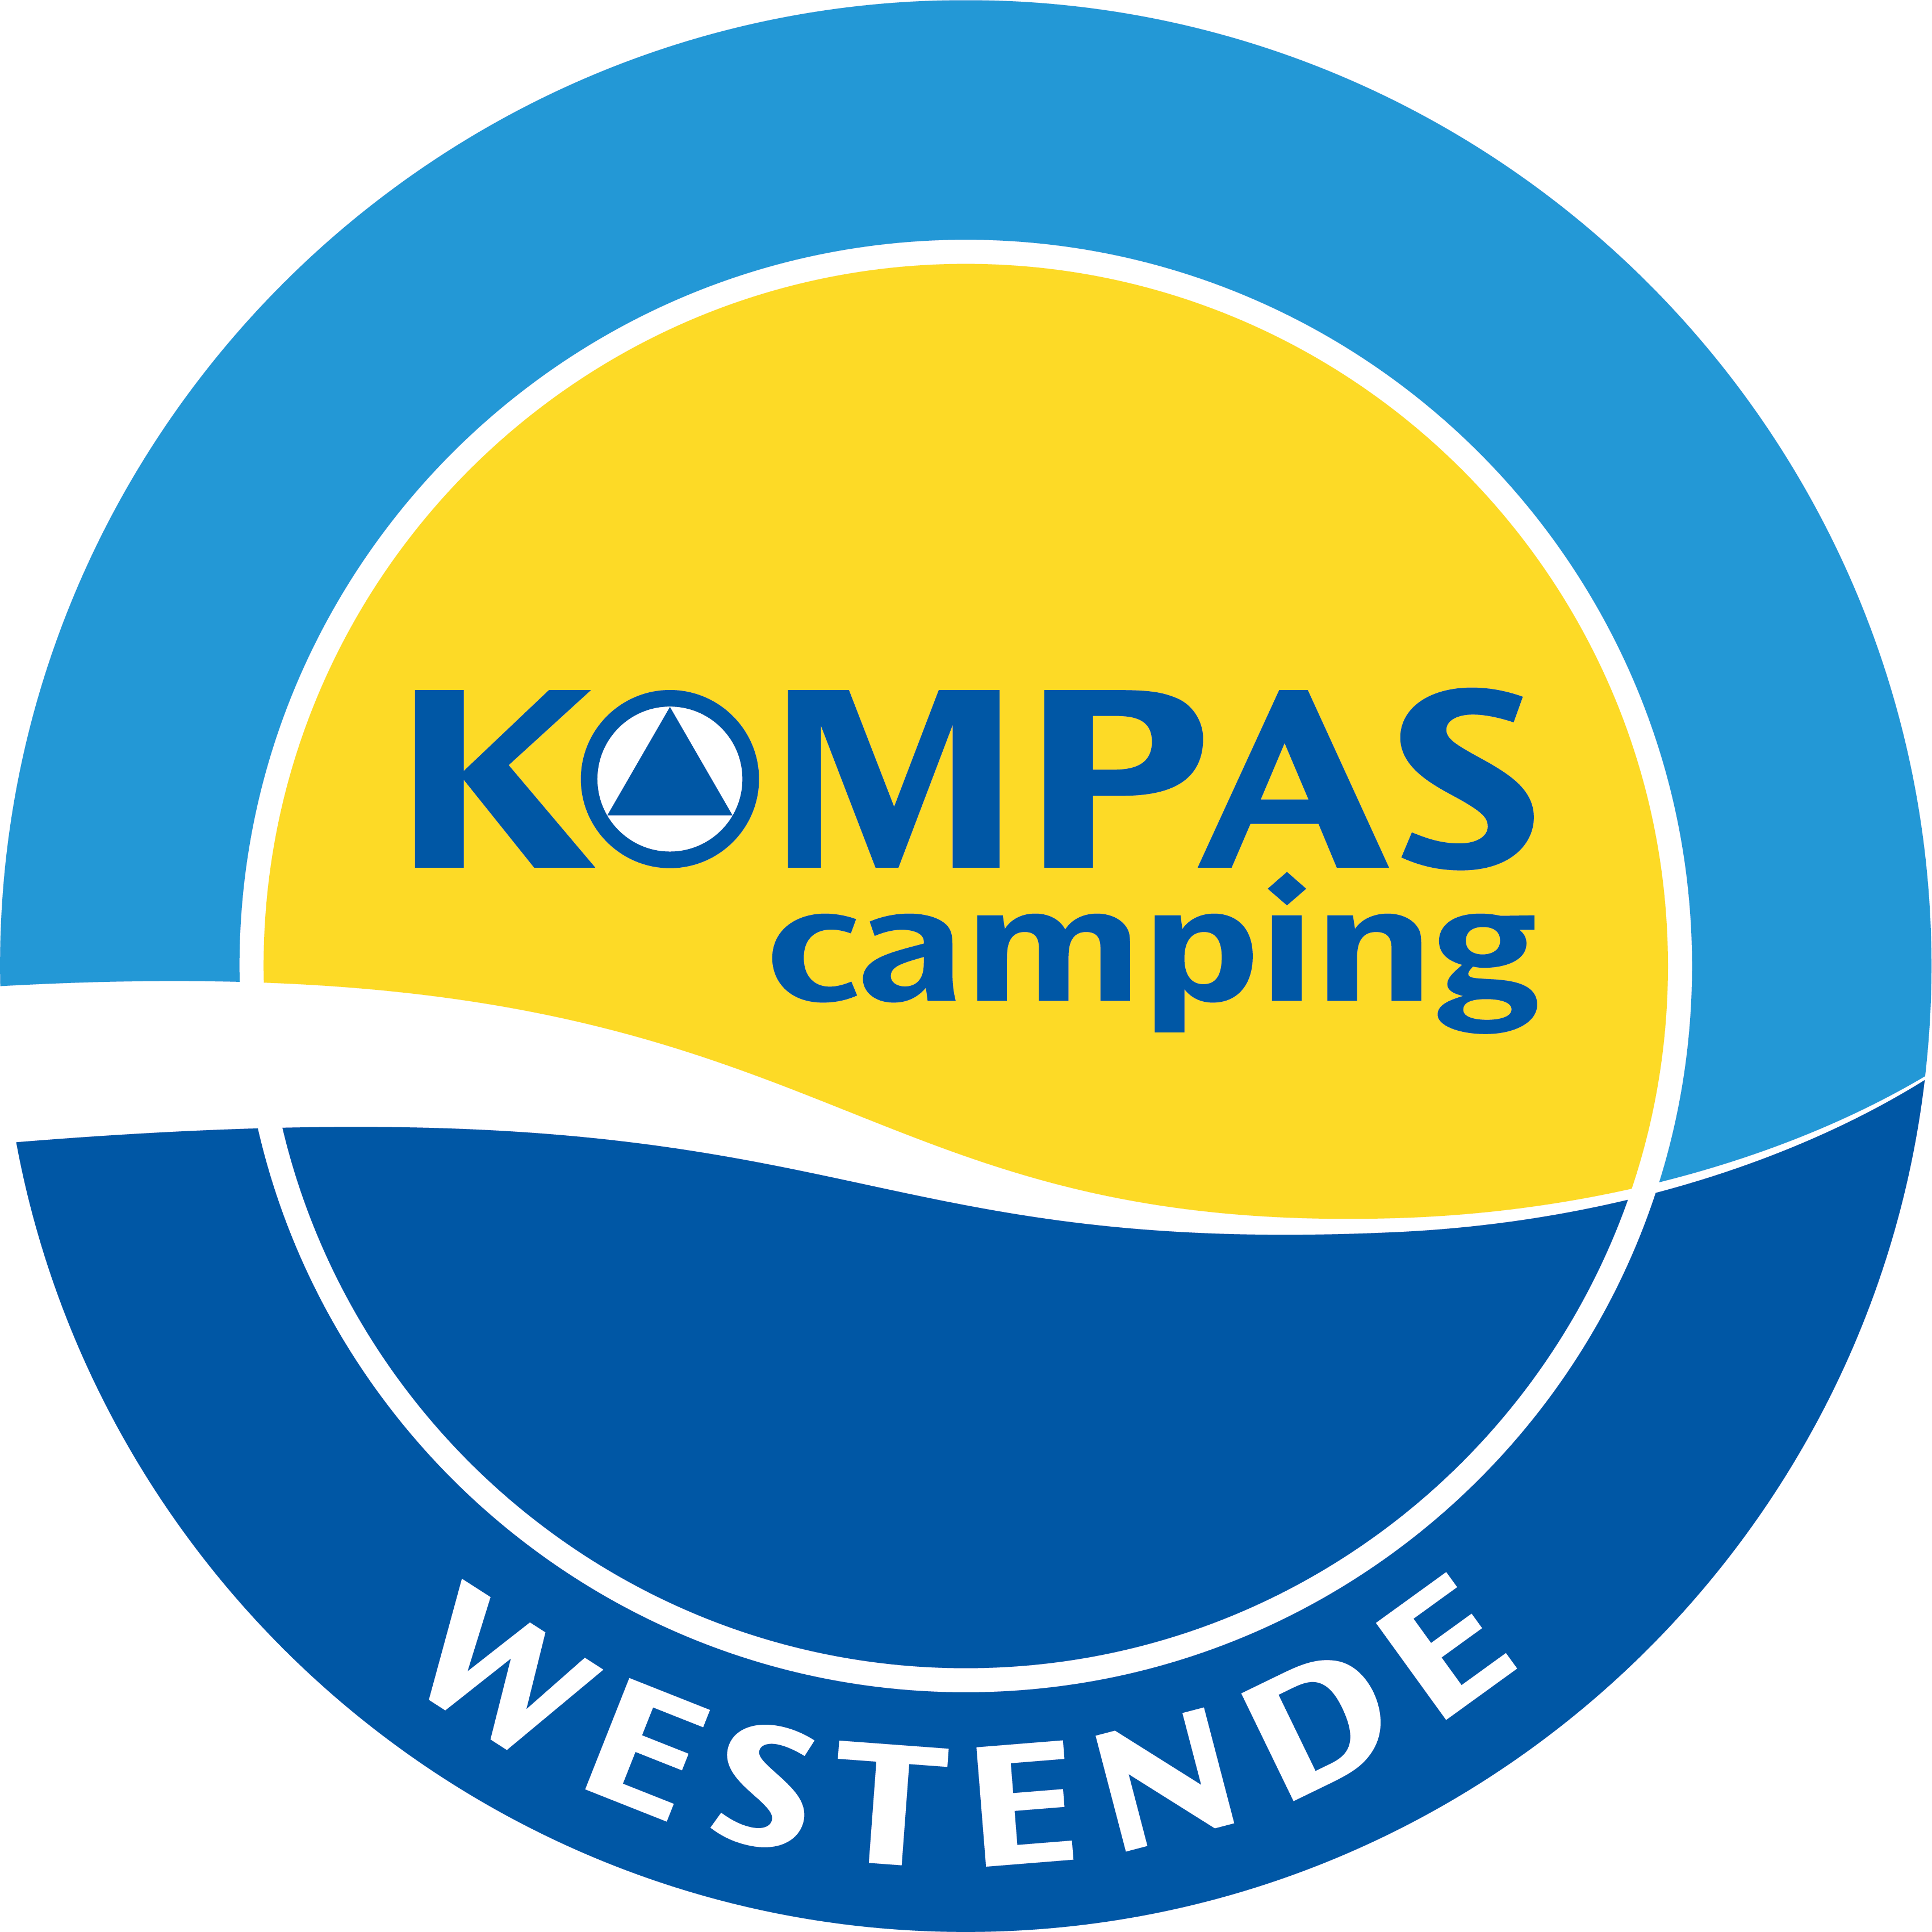 Camping Westende